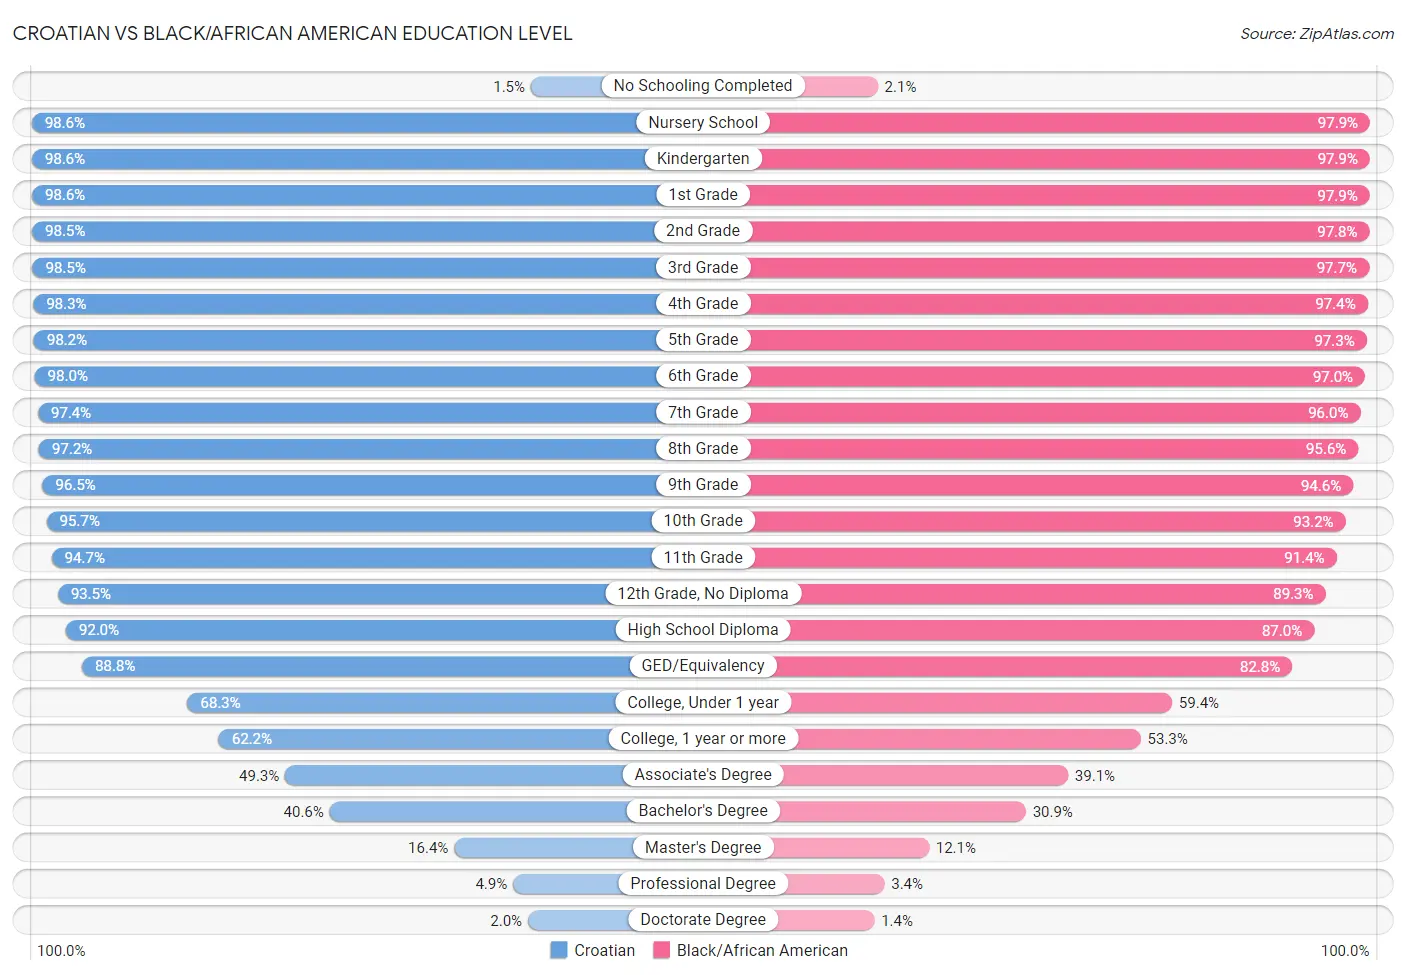 Croatian vs Black/African American Education Level